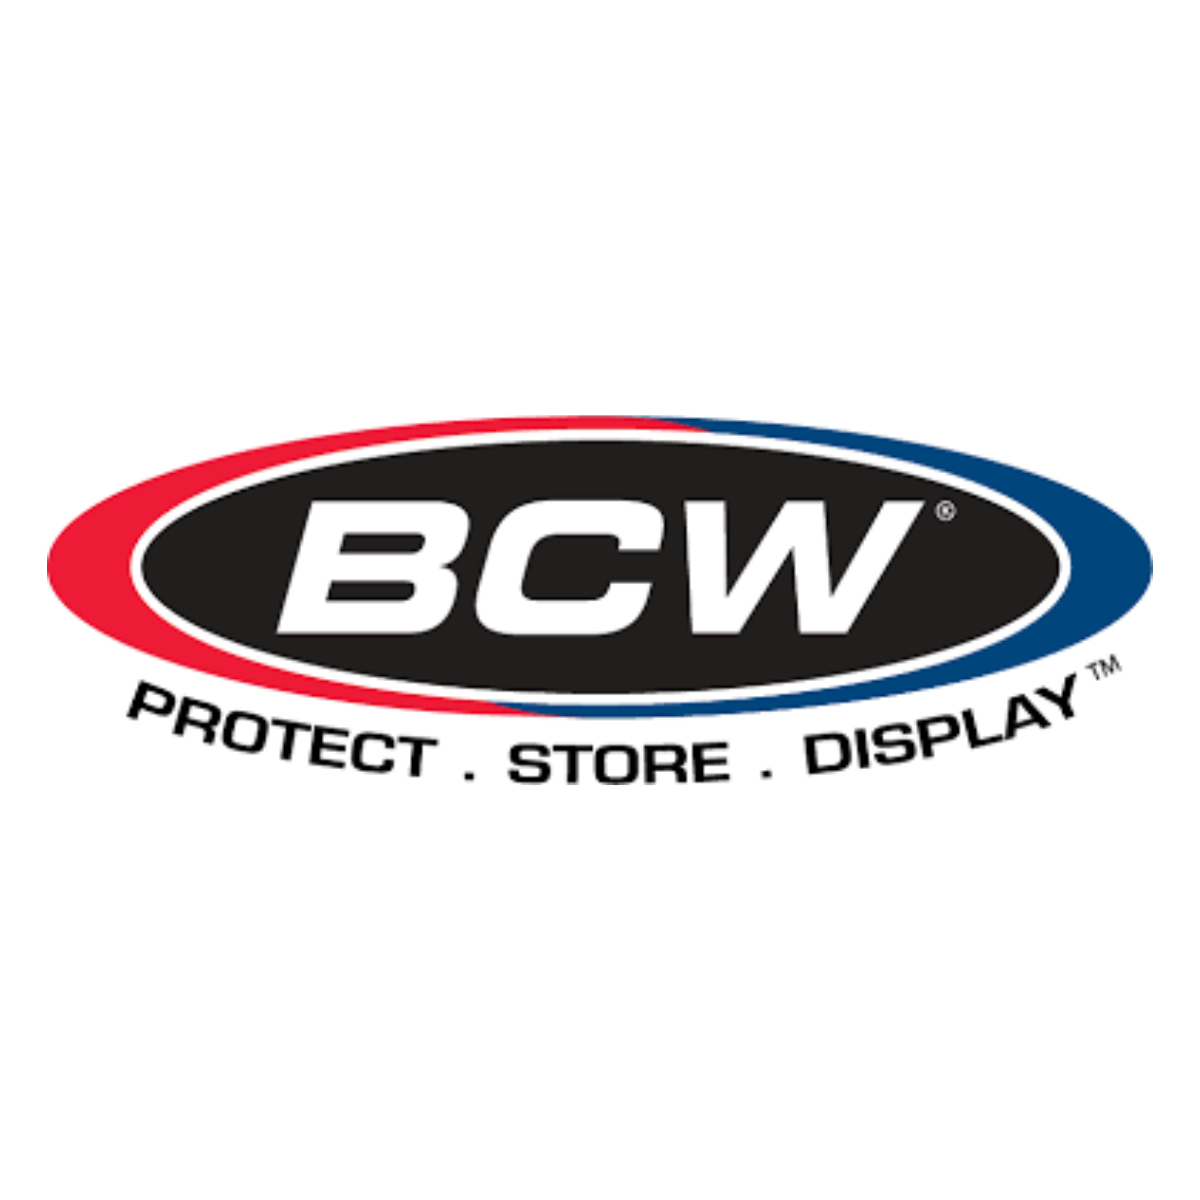 BCW Collectible Card Bin-1600-GRAY-BCW Supplies-Ace Cards &amp; Collectibles